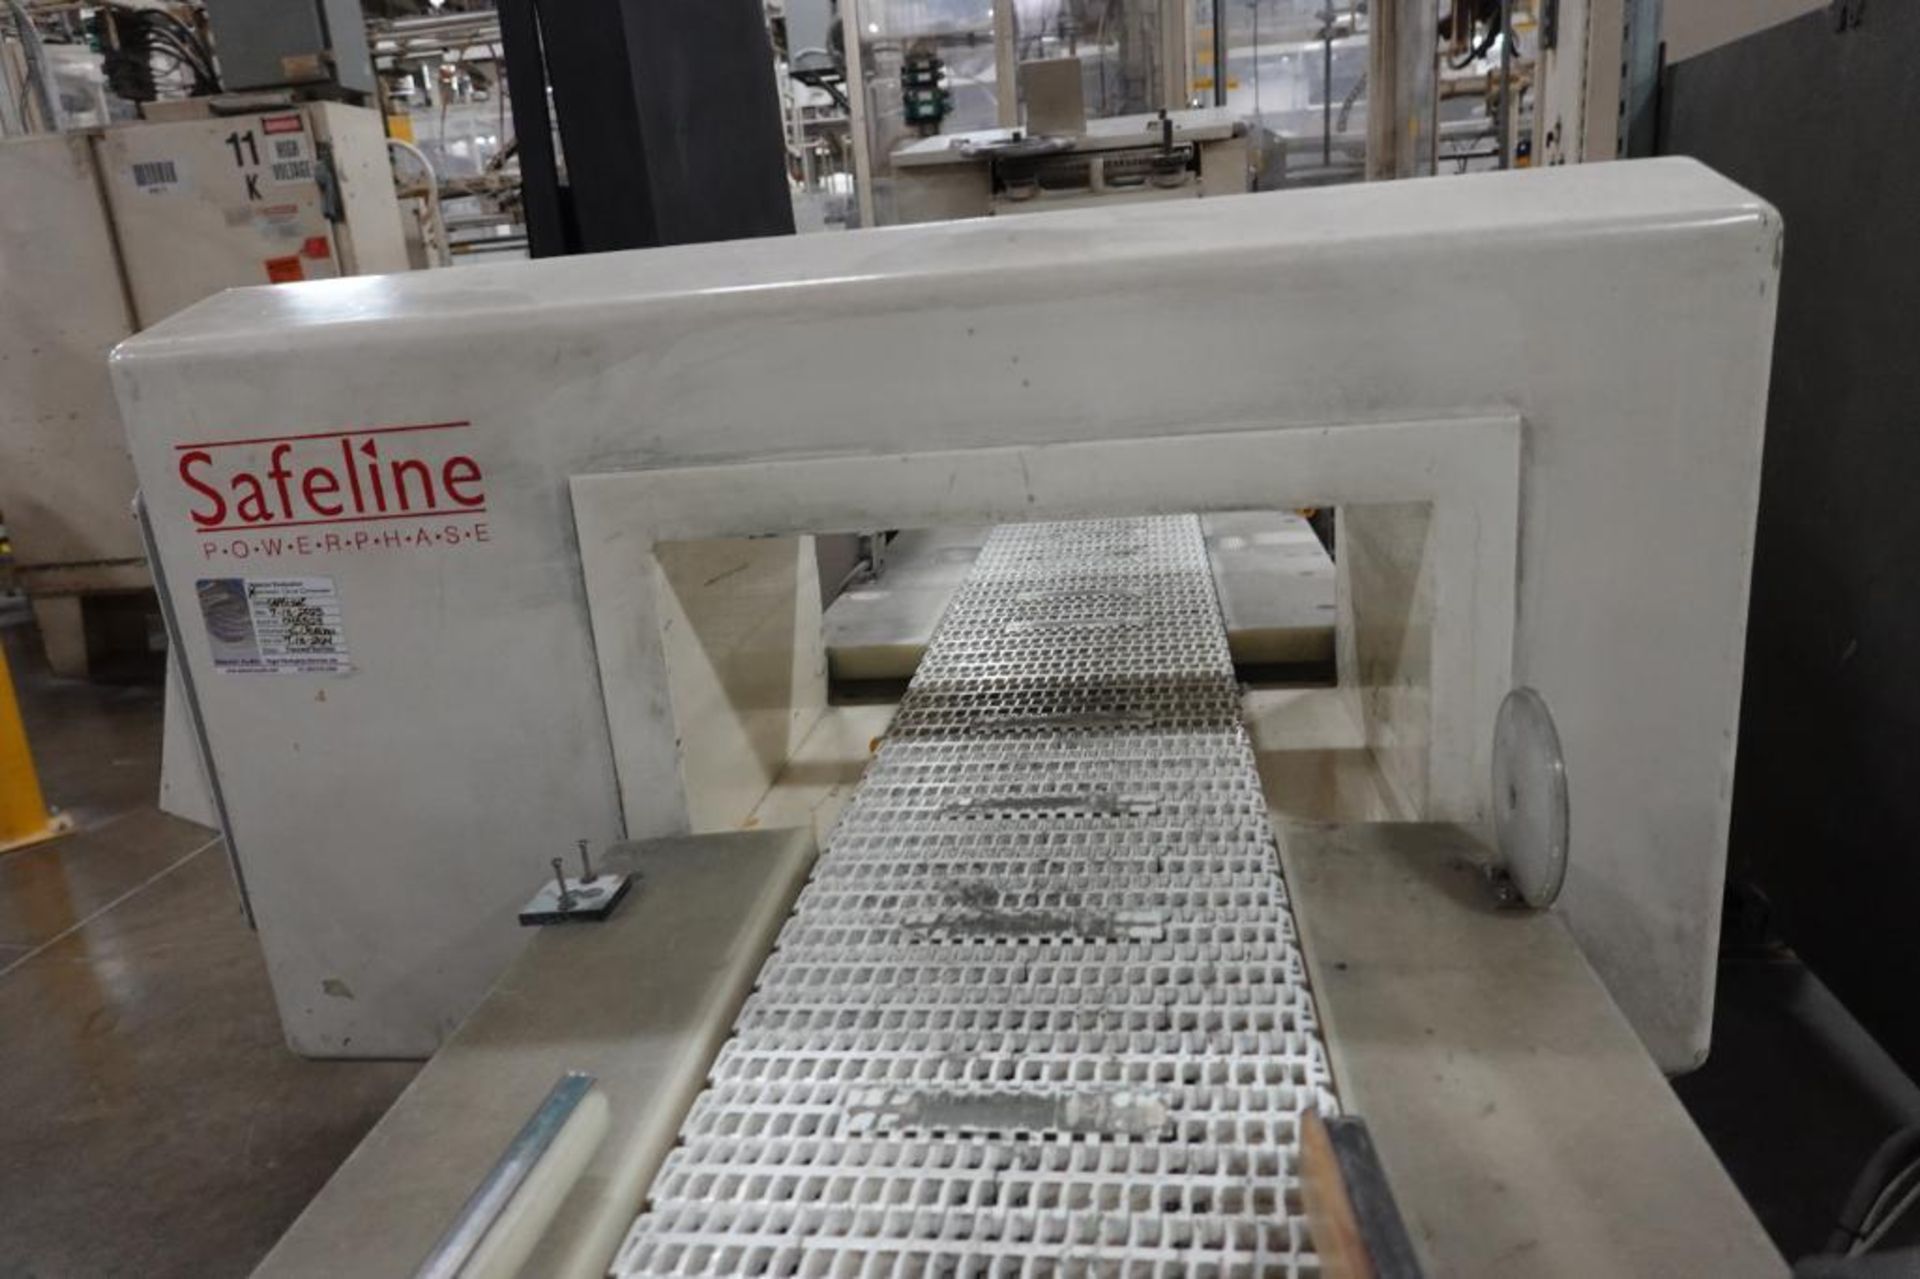 Safeline metal detector with conveyor - Image 4 of 9